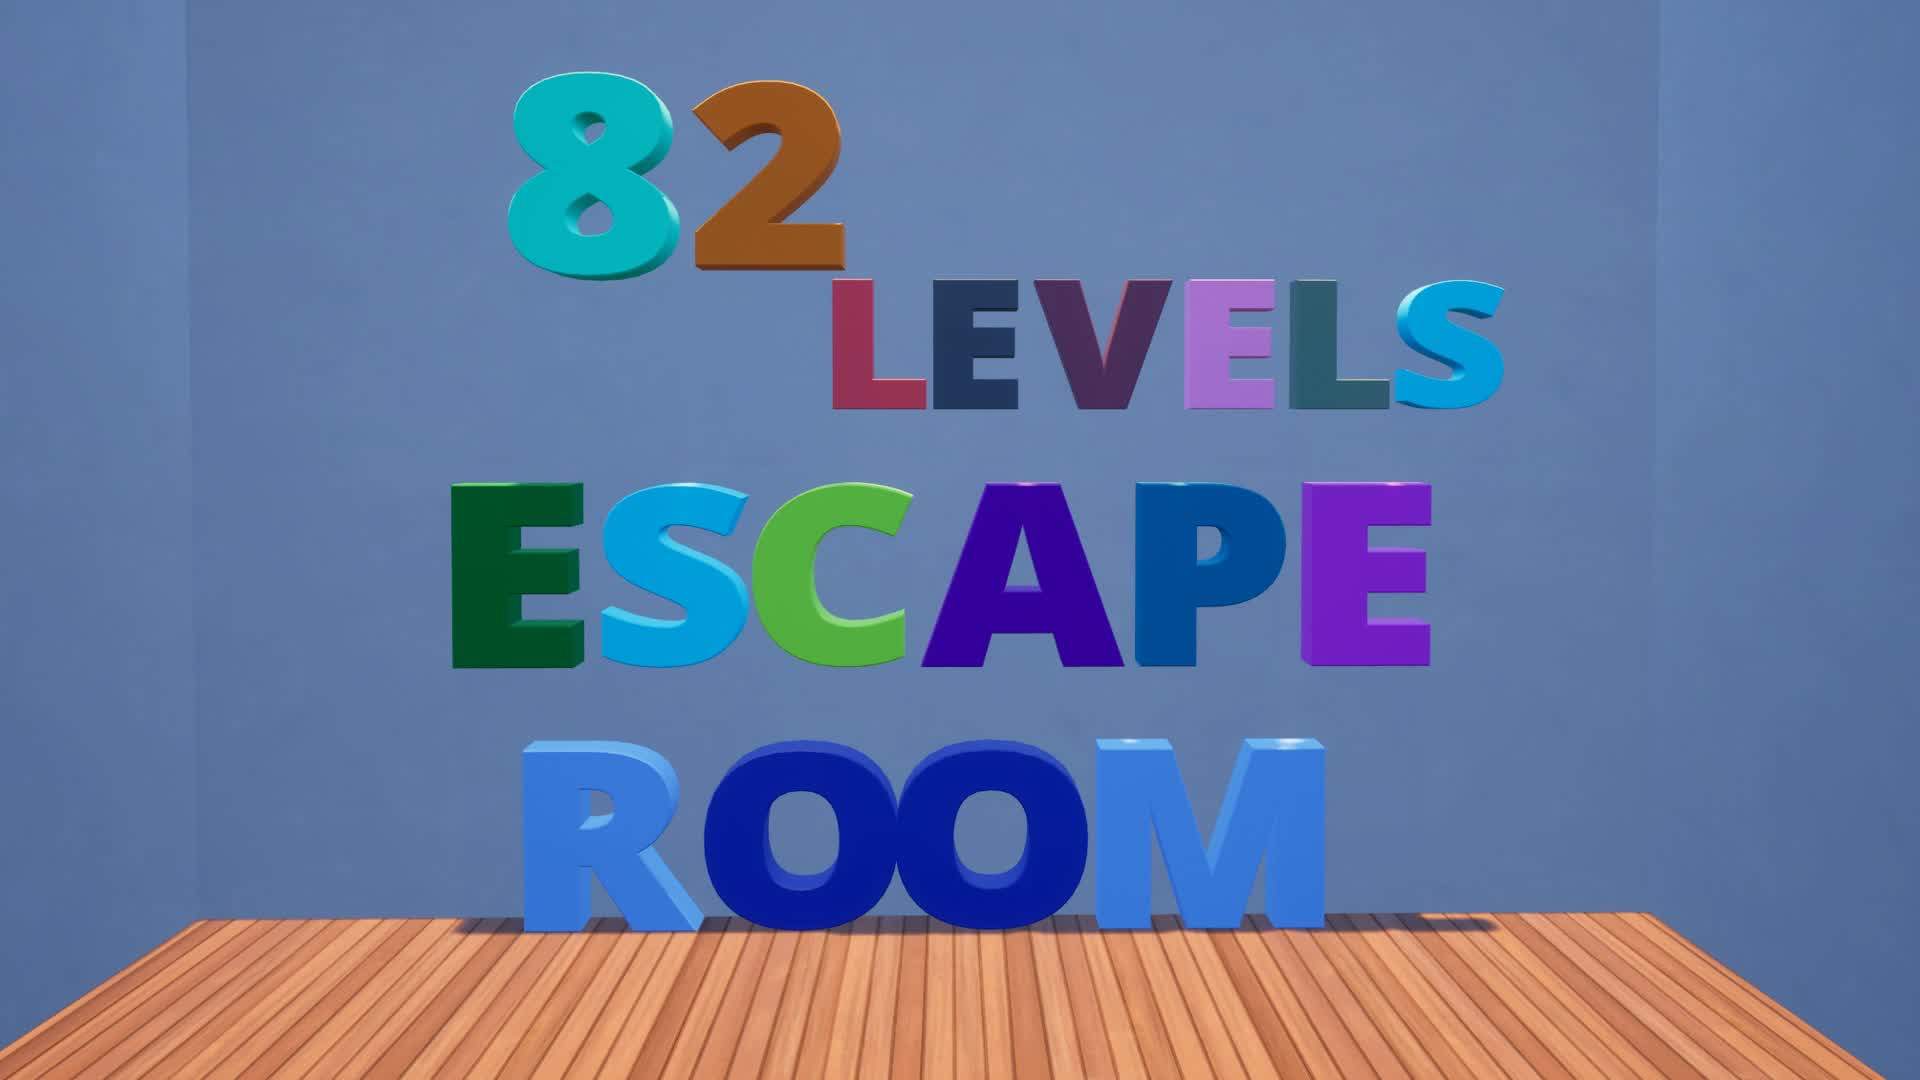 82 Levels Escape Room 🏃